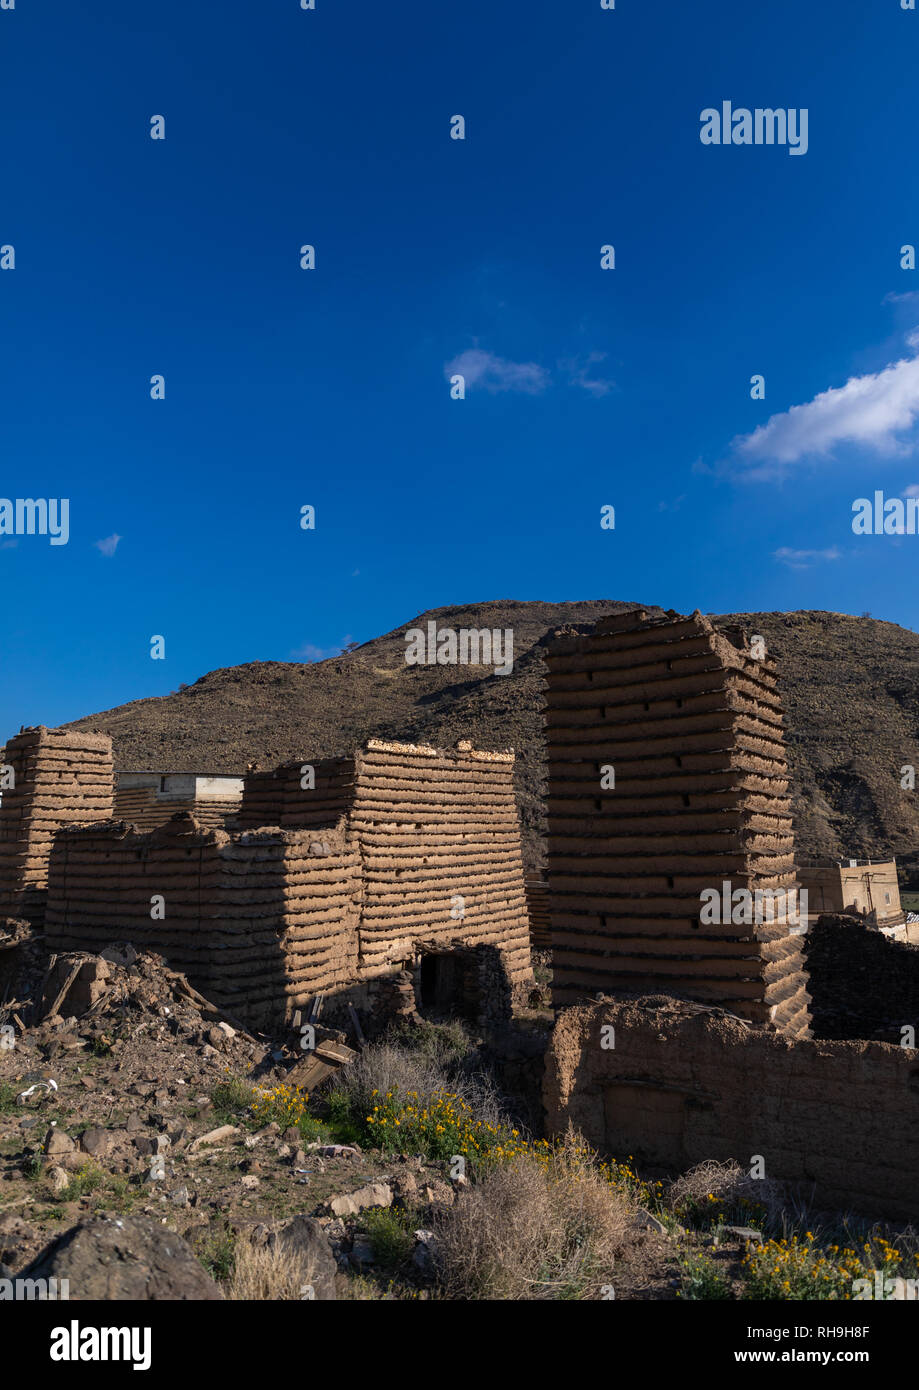 Stone and mud houses with slates, Asir province, Sarat Abidah, Saudi Arabia Stock Photo